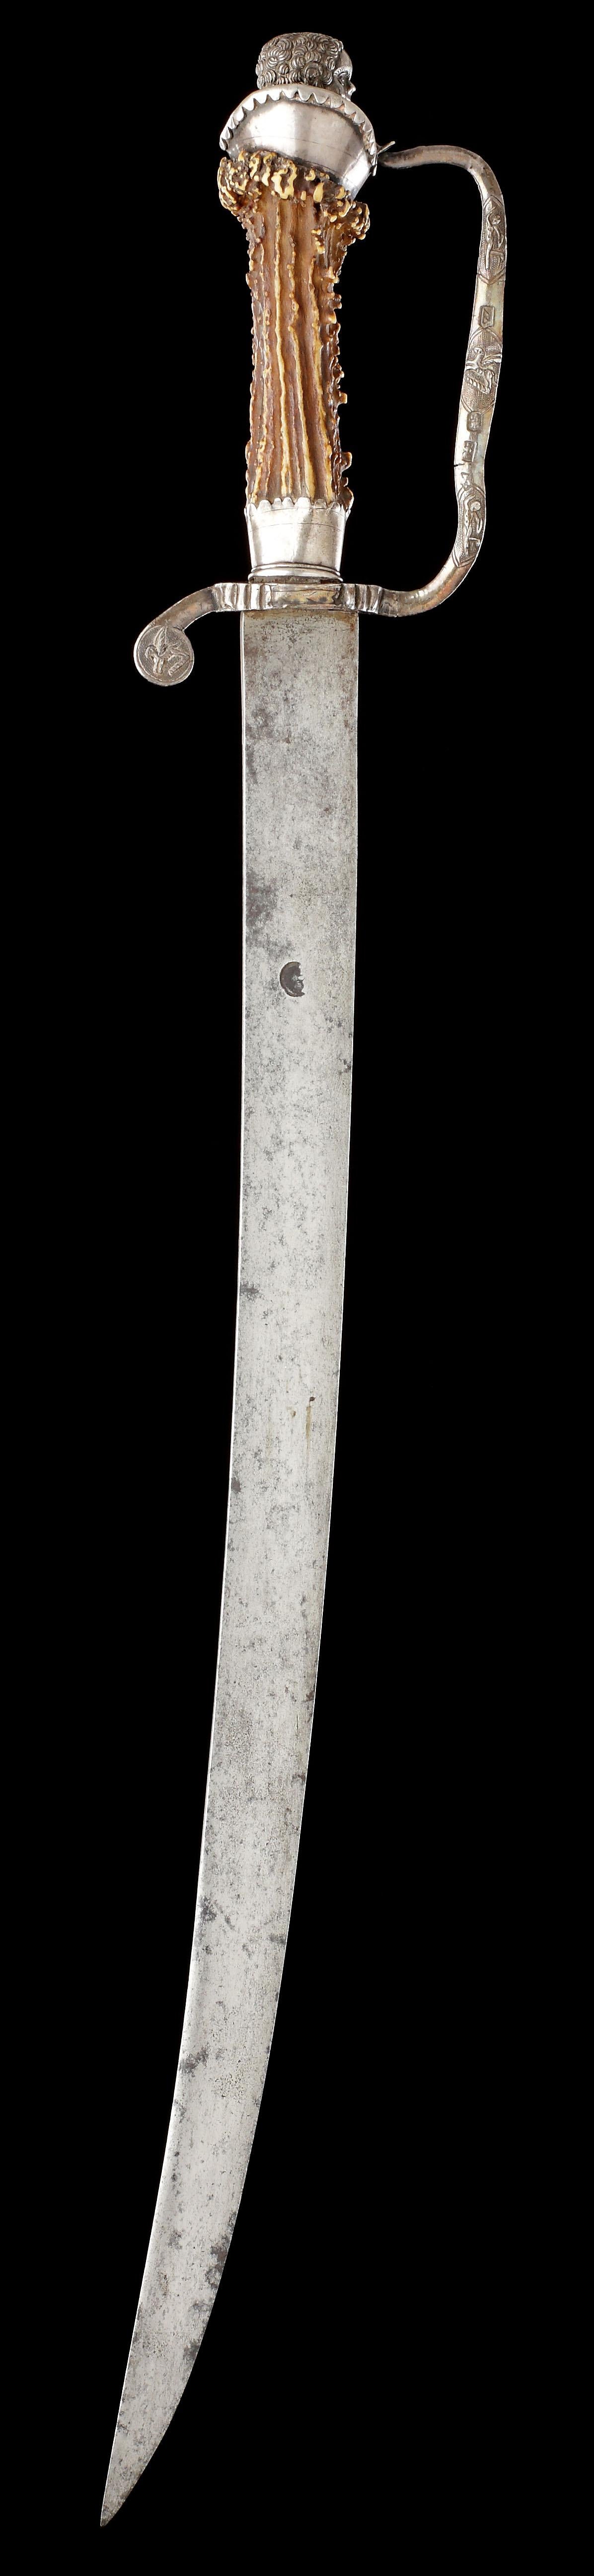 17th century hunting sword